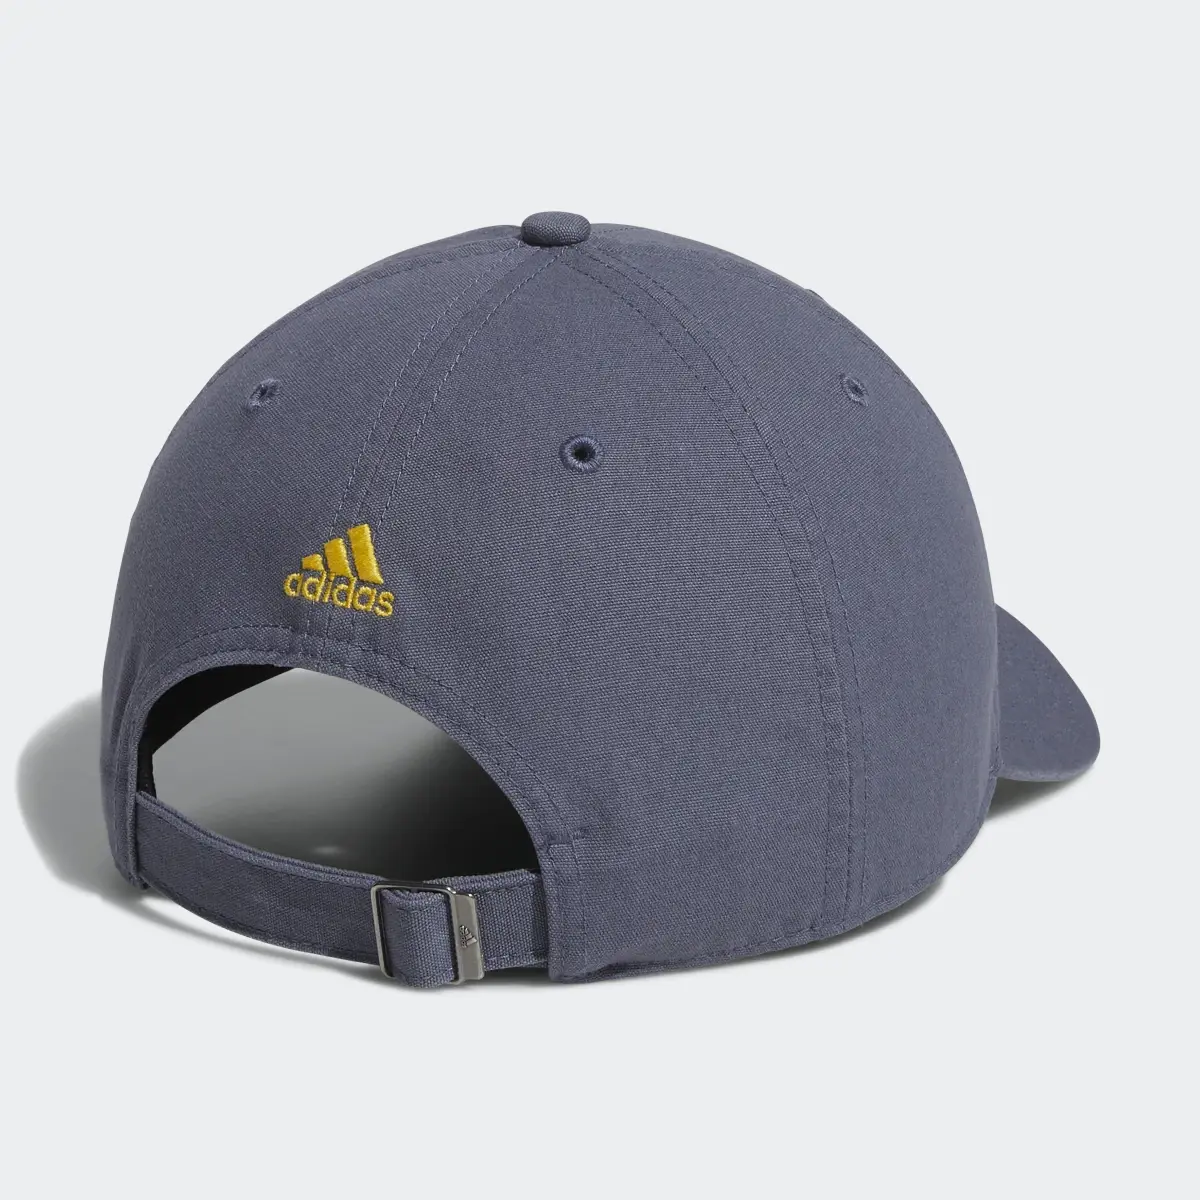 Adidas Ultimate Hat. 3